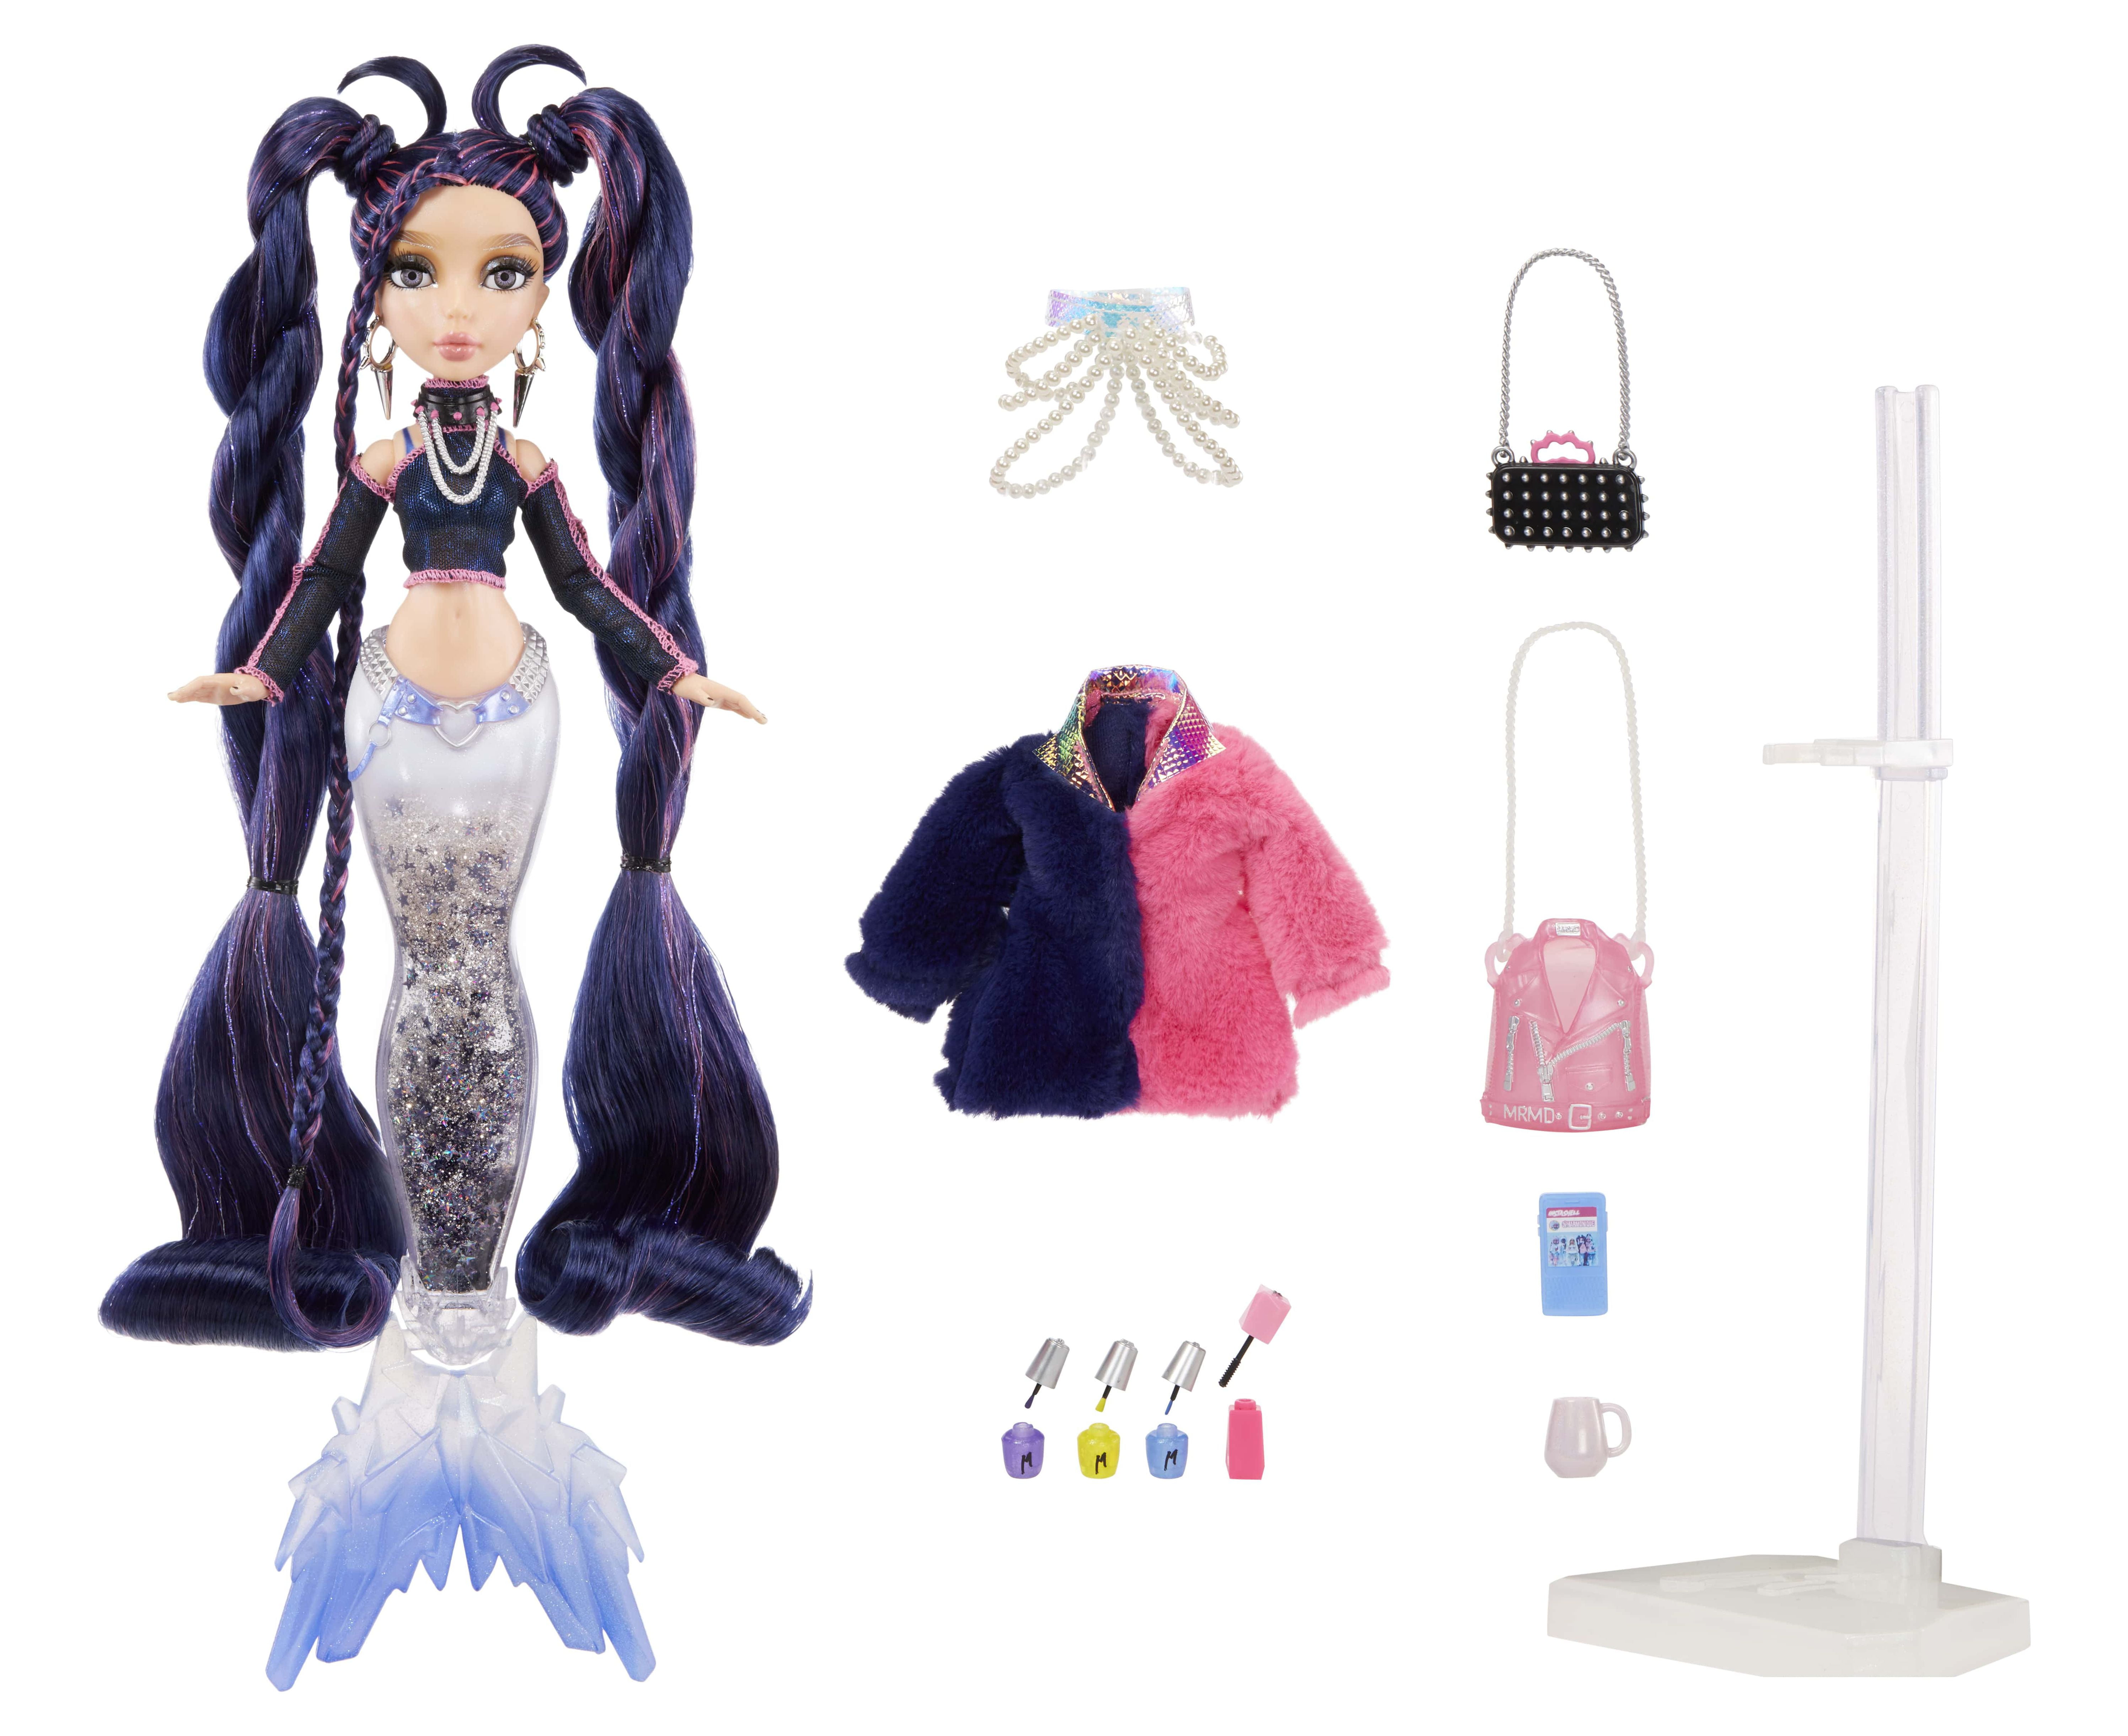 Mermaze Mermaidz Winter Waves Mermaid Fashion Doll, Nera 